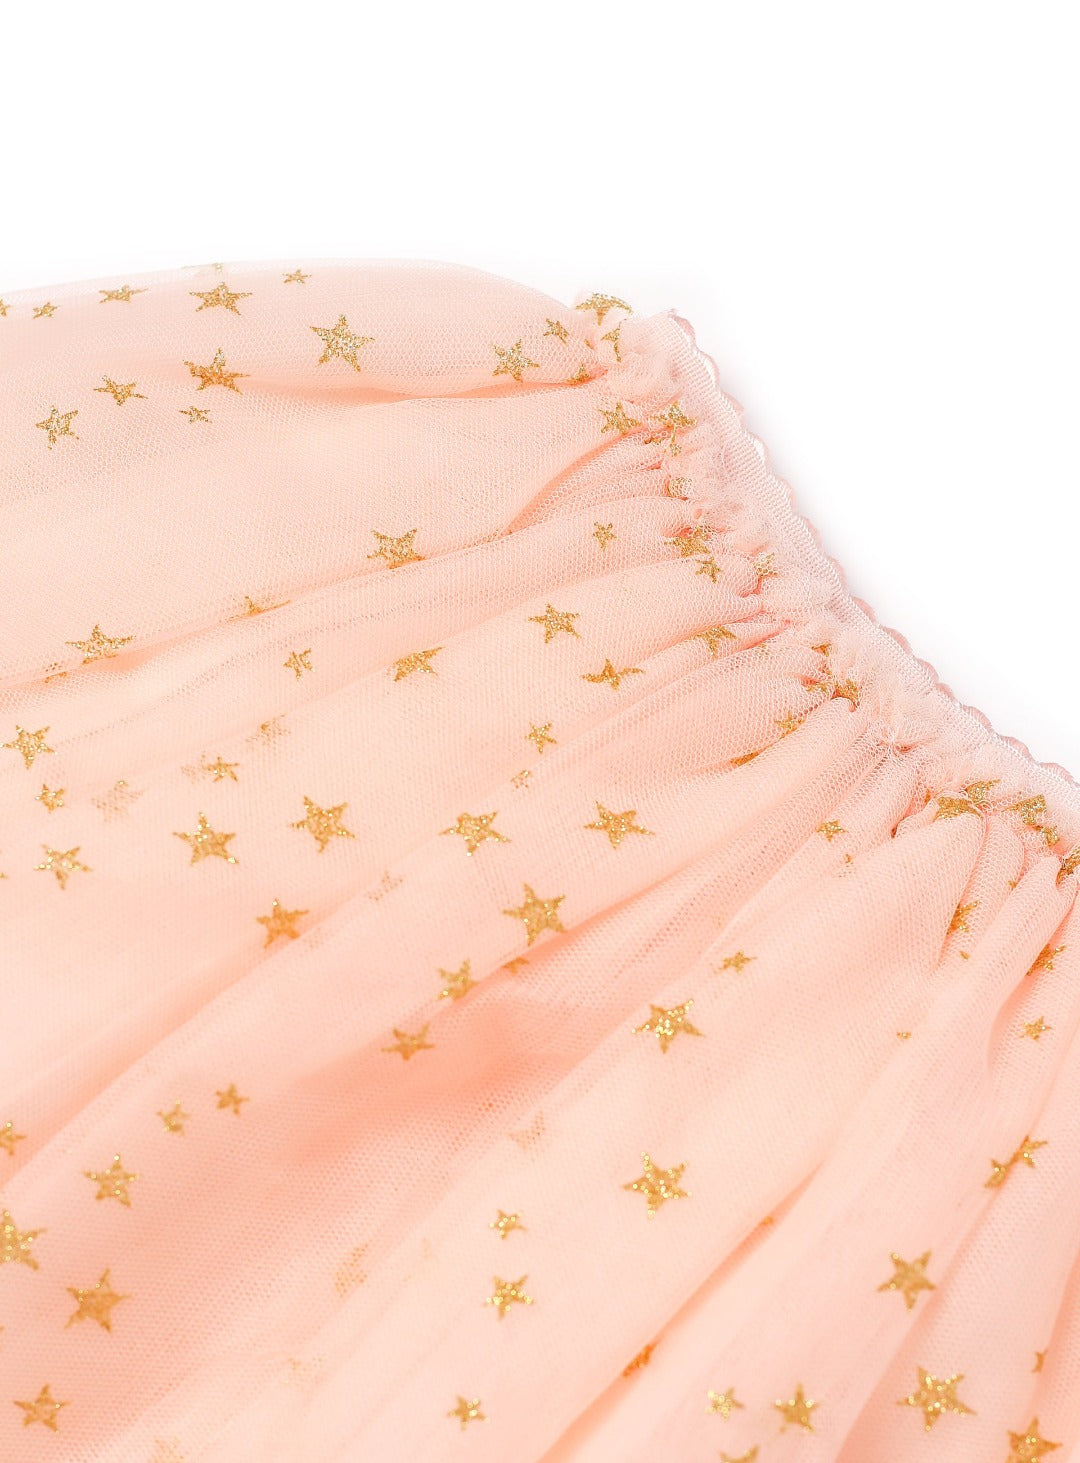 pink tutu skirt with sparkling stars